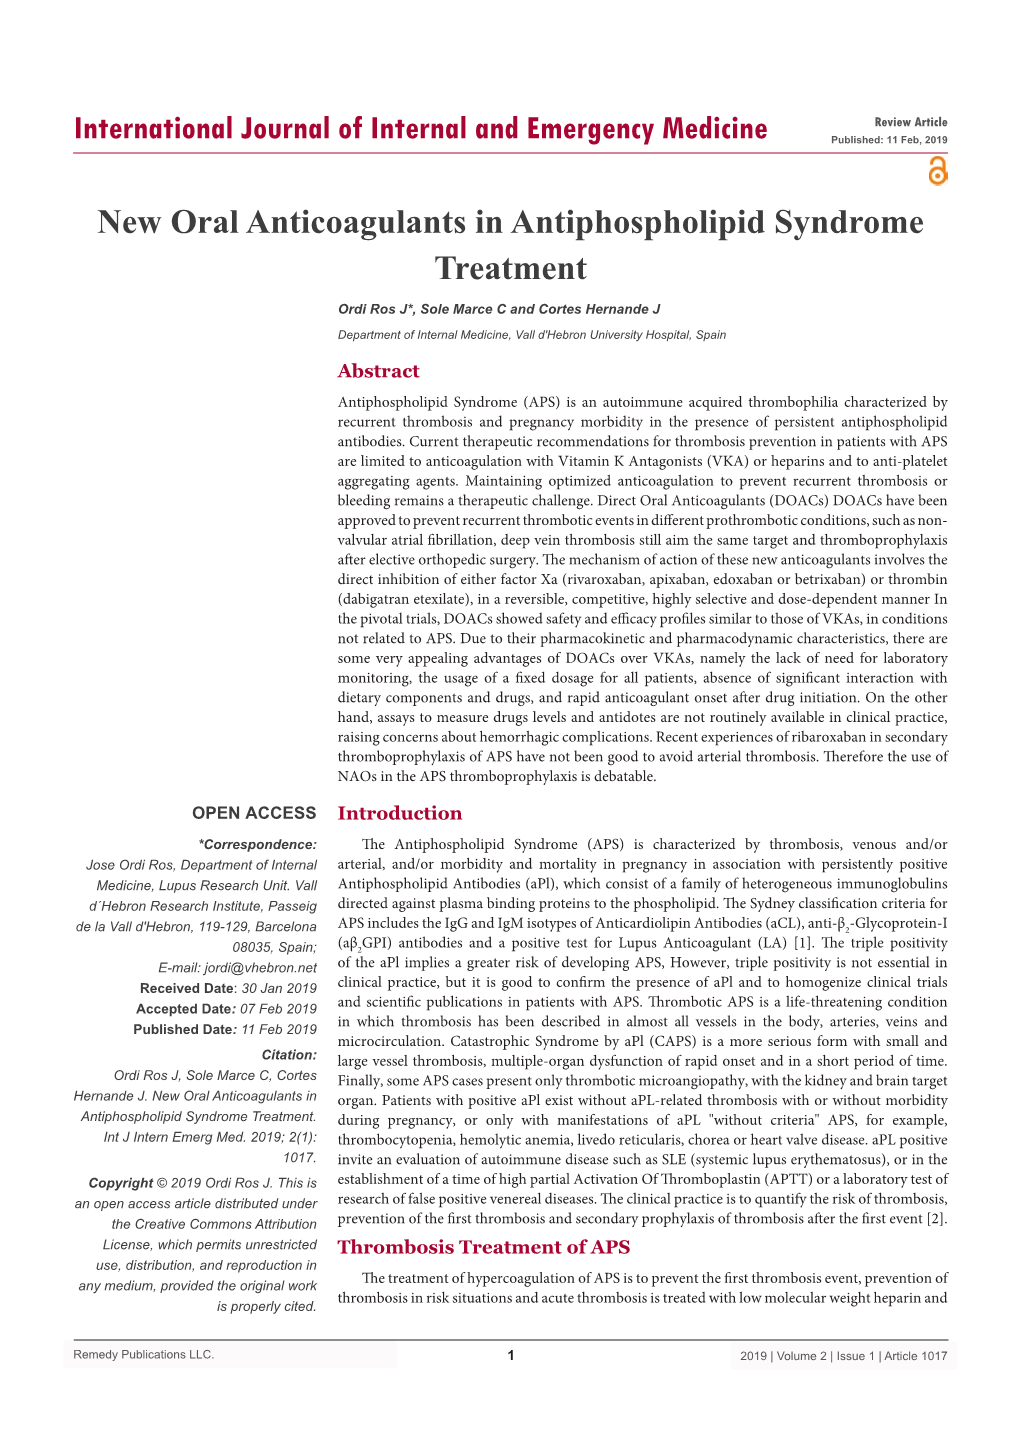 New Oral Anticoagulants in Antiphospholipid Syndrome Treatment